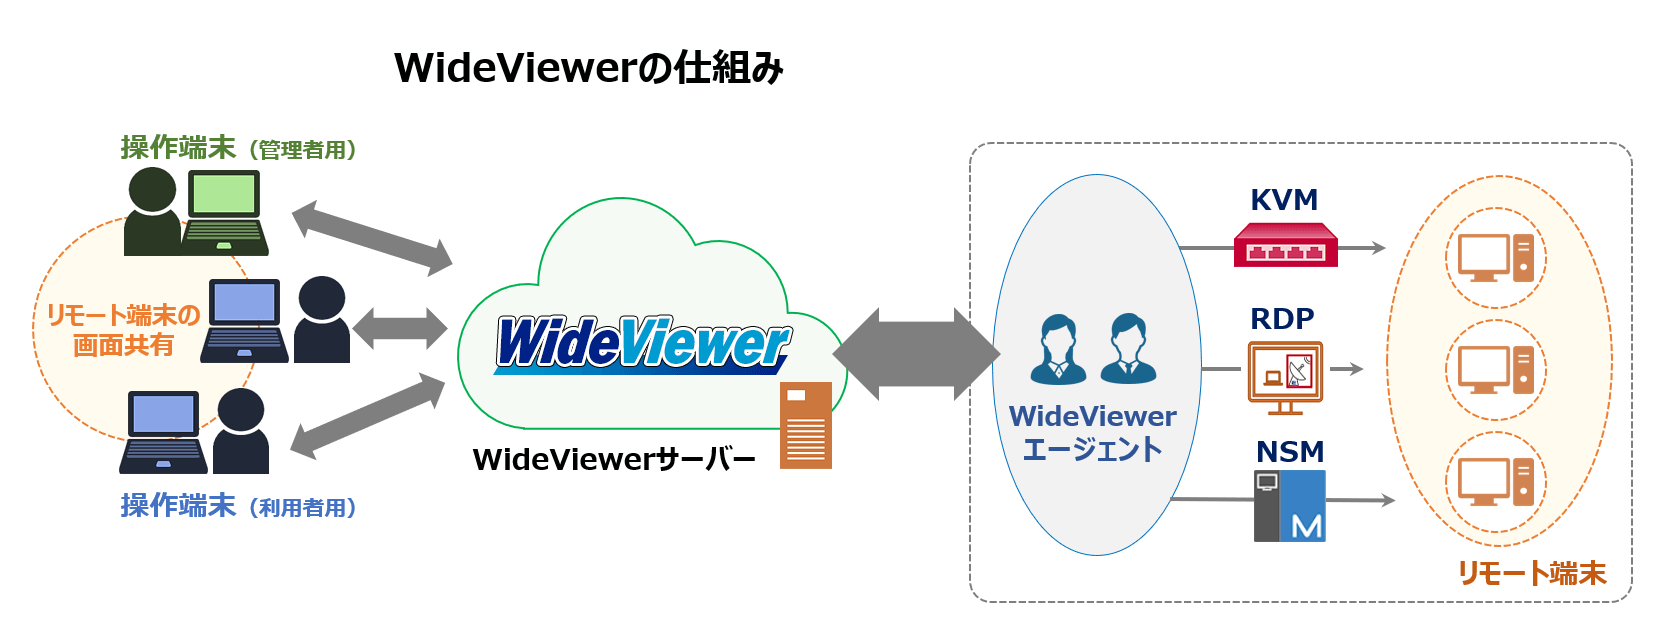 WideViewerサービス概要図